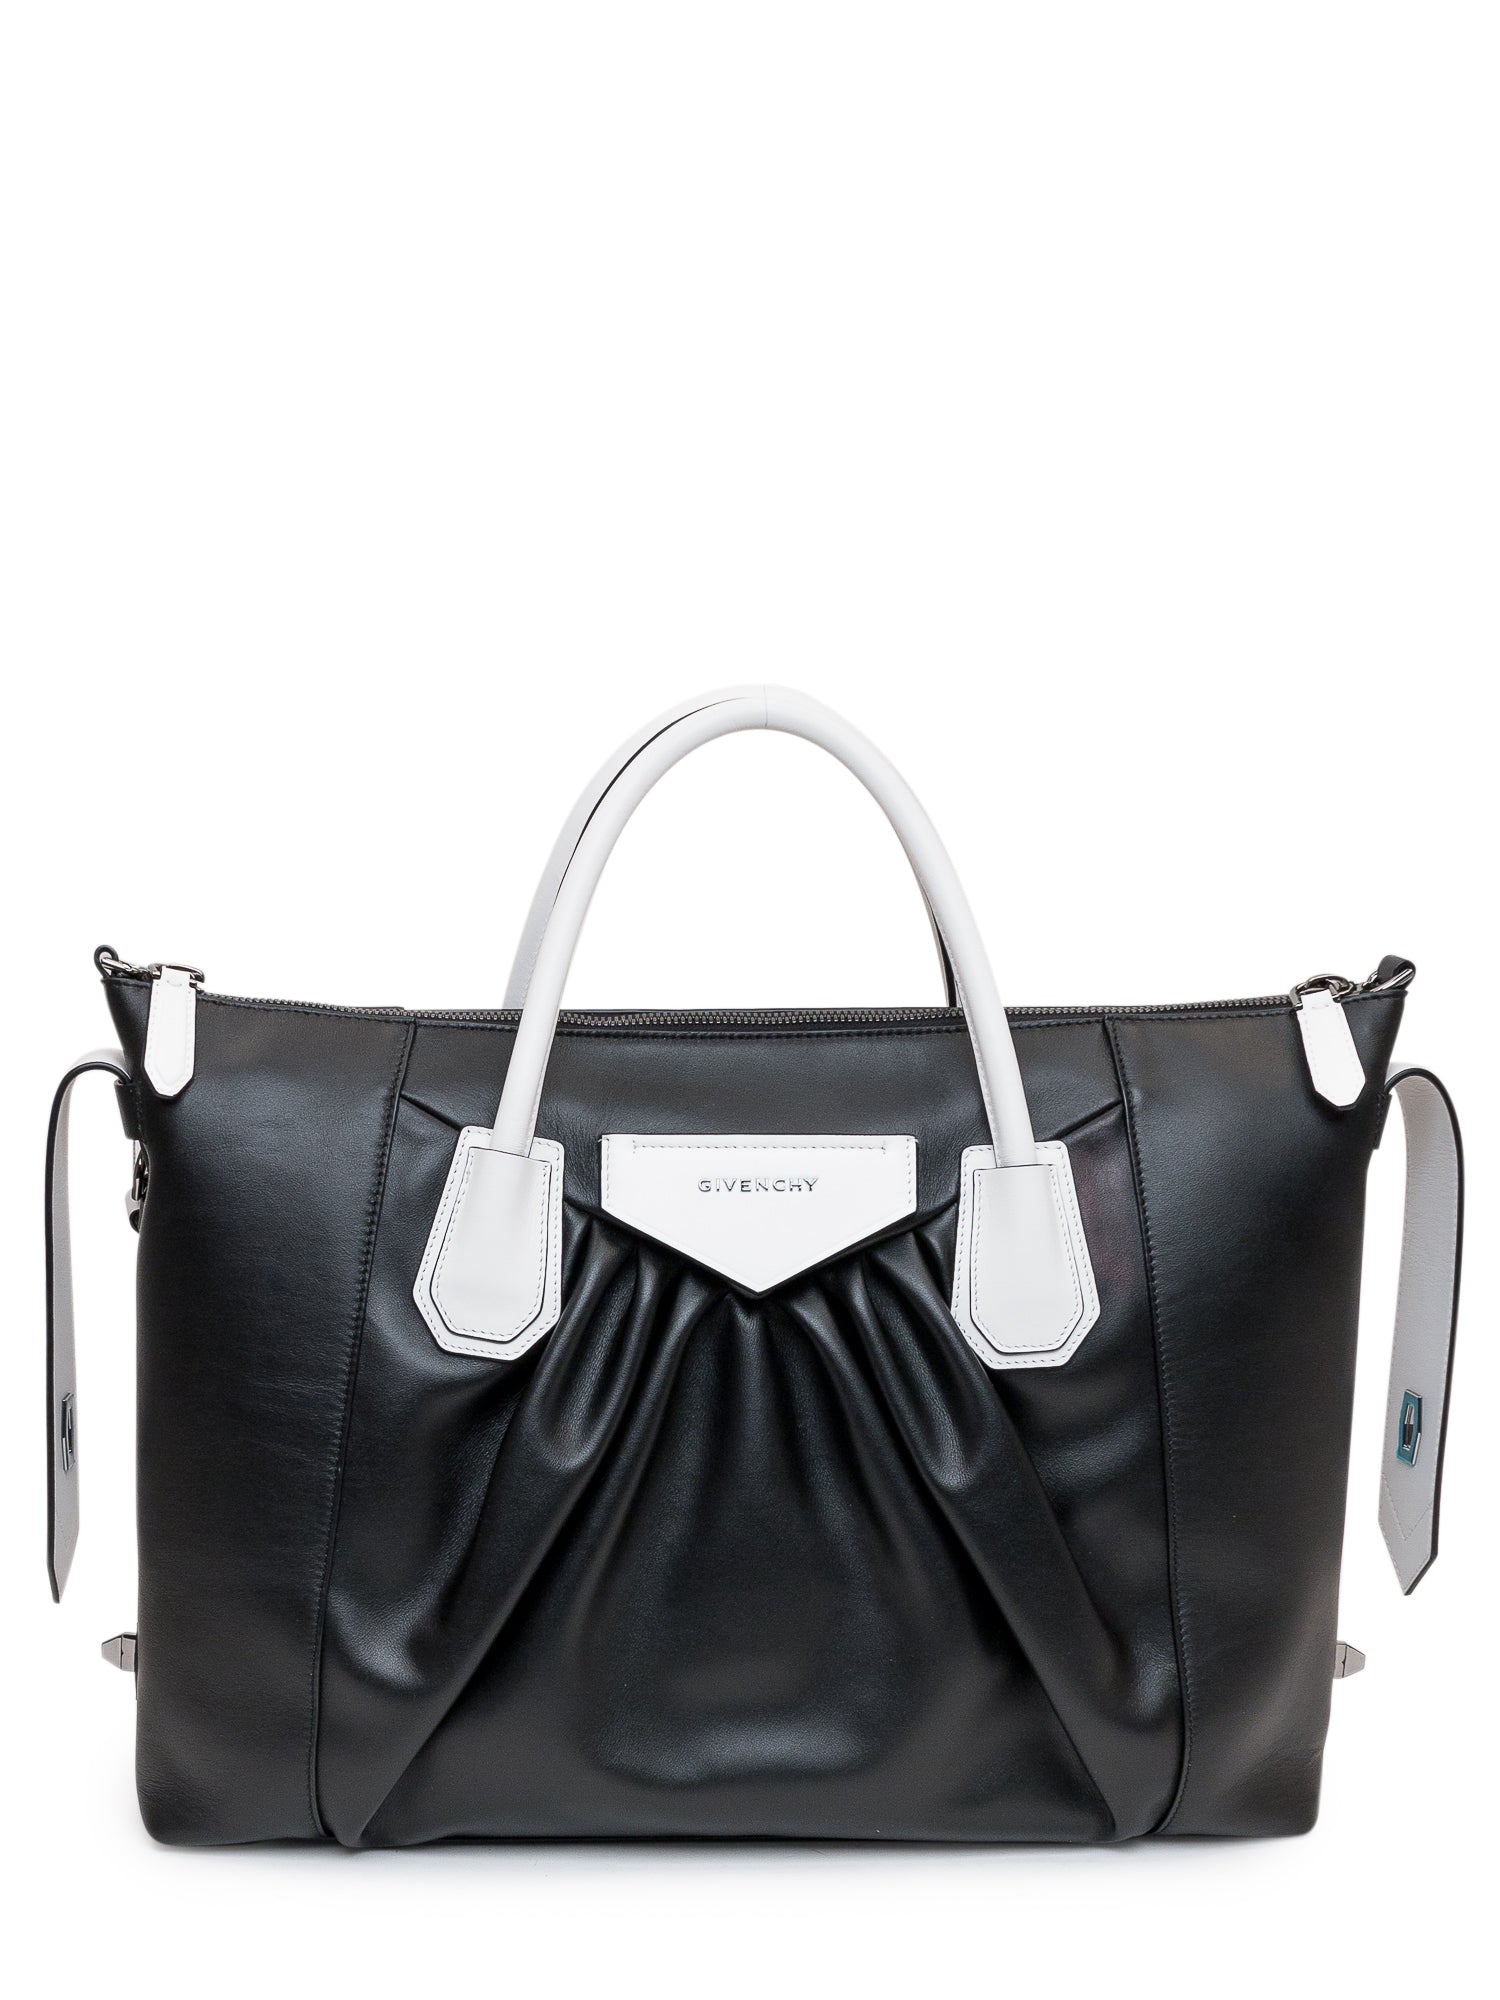 Givenchy Antigona Soft Medium Tote Bag In Black